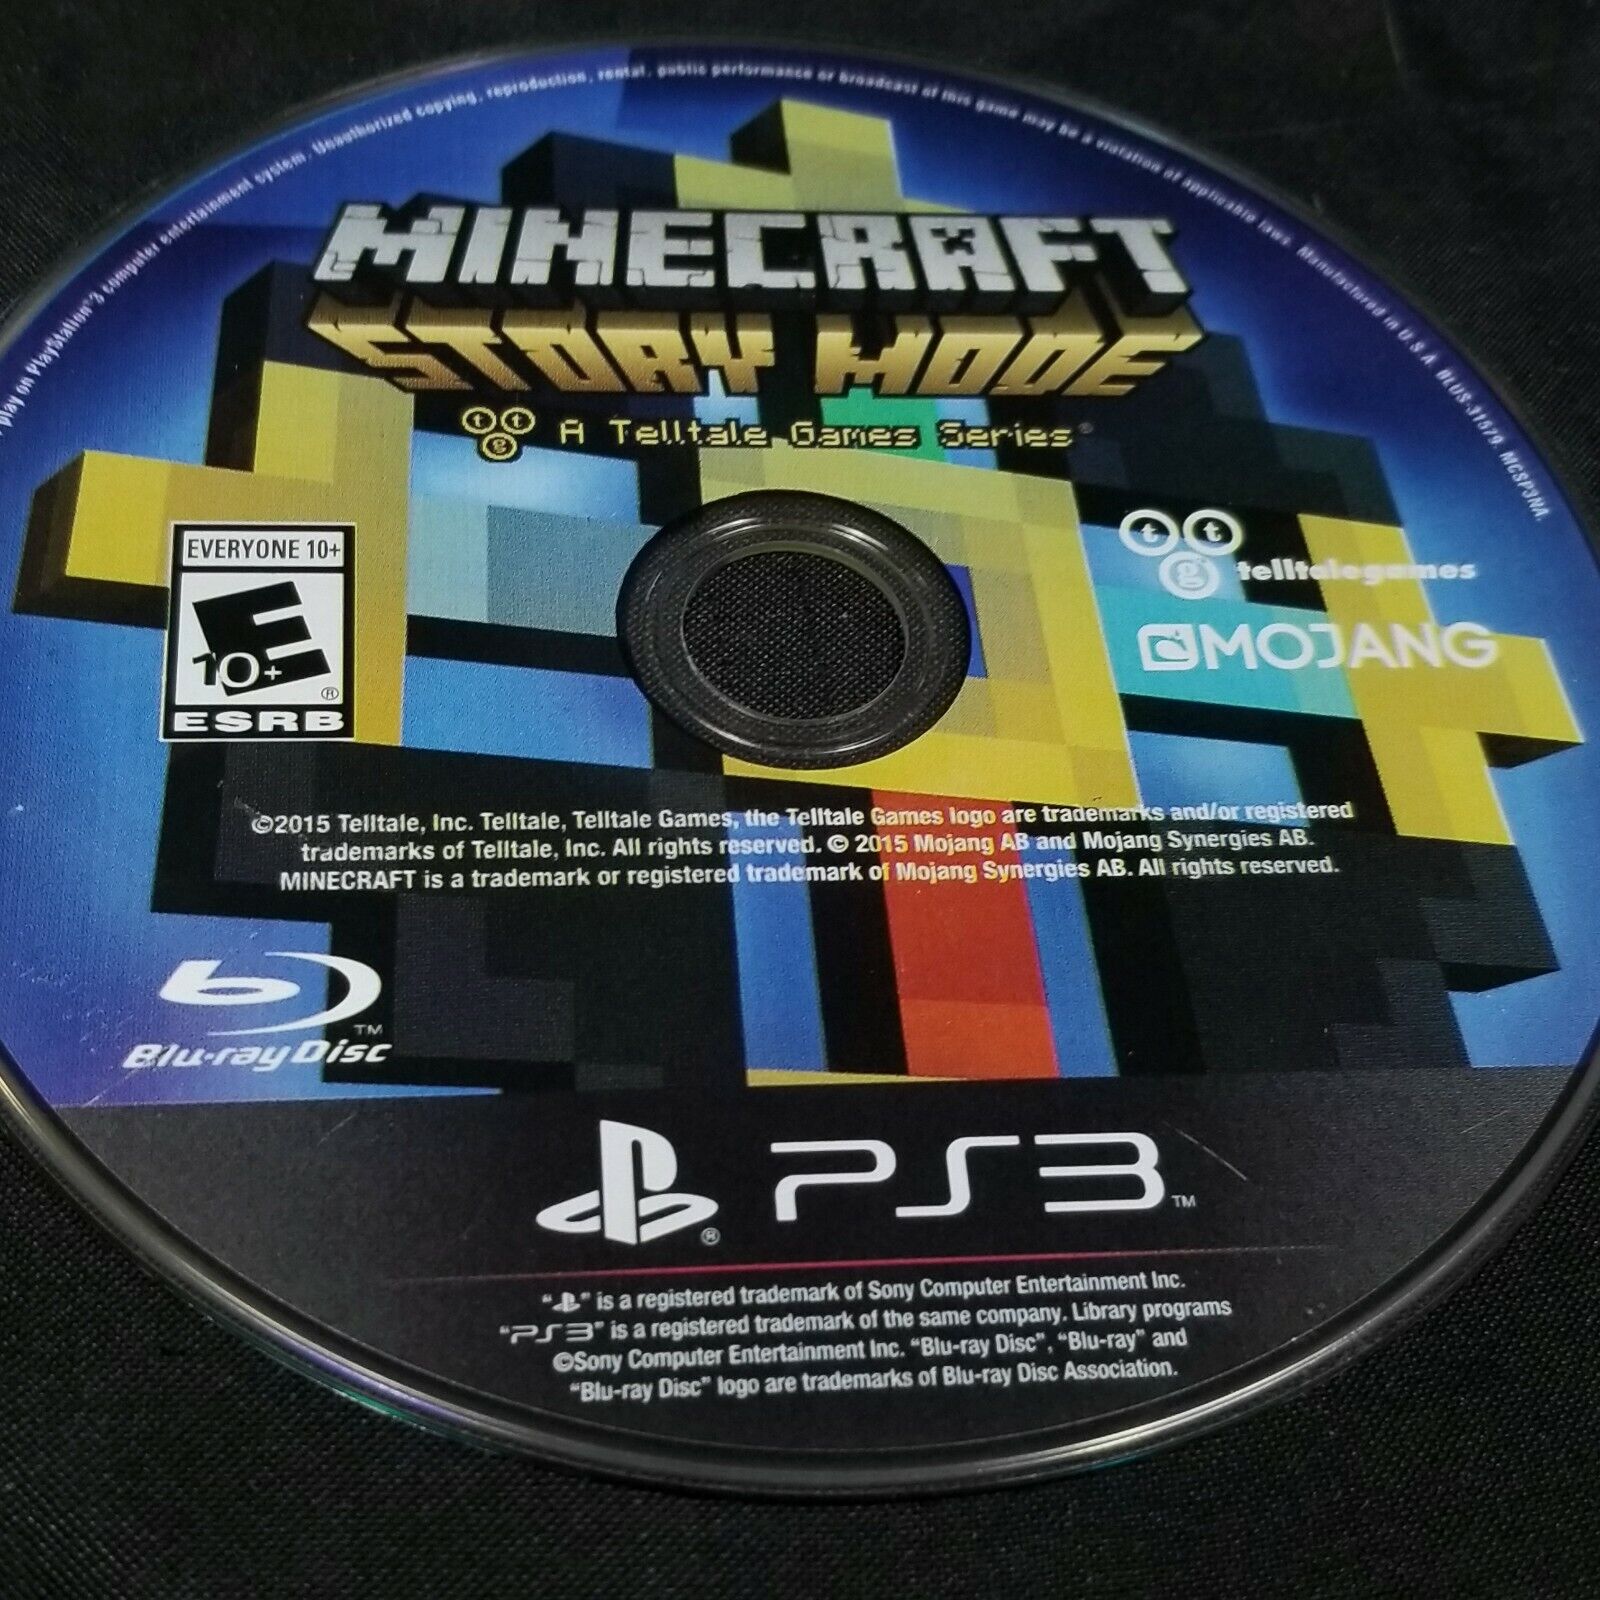 Minecraft: Story Mode - Season Disc (PS3) 